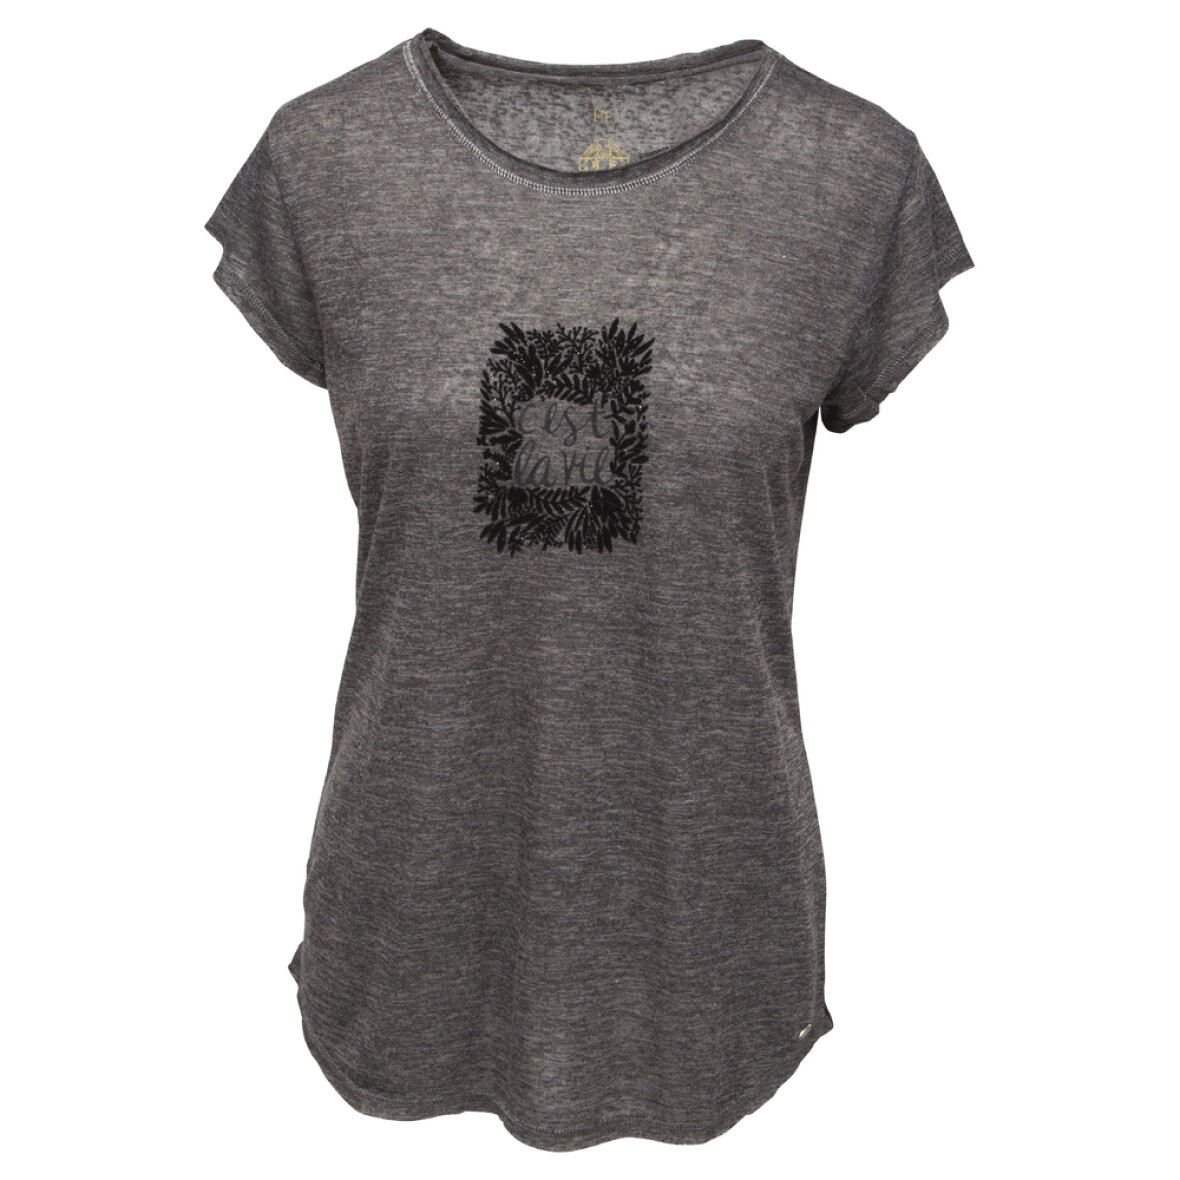 Cph Plus t-shirt Yvette grå - Shop online nu